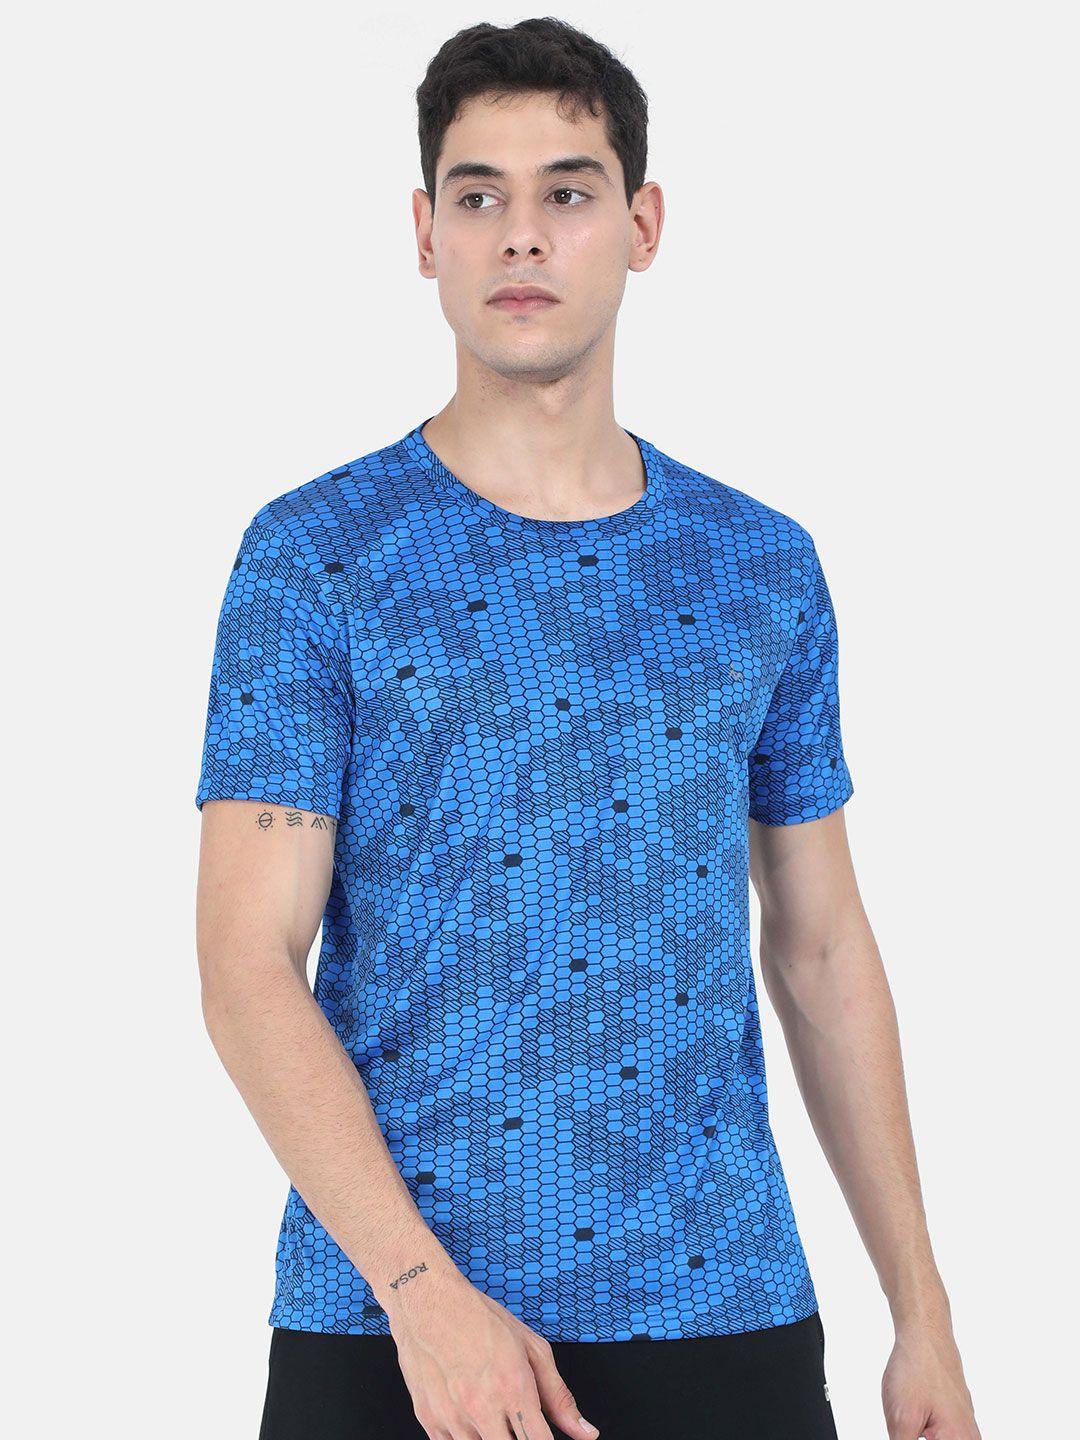 masculino latino men blue & black geometric printed training or gym t-shirt